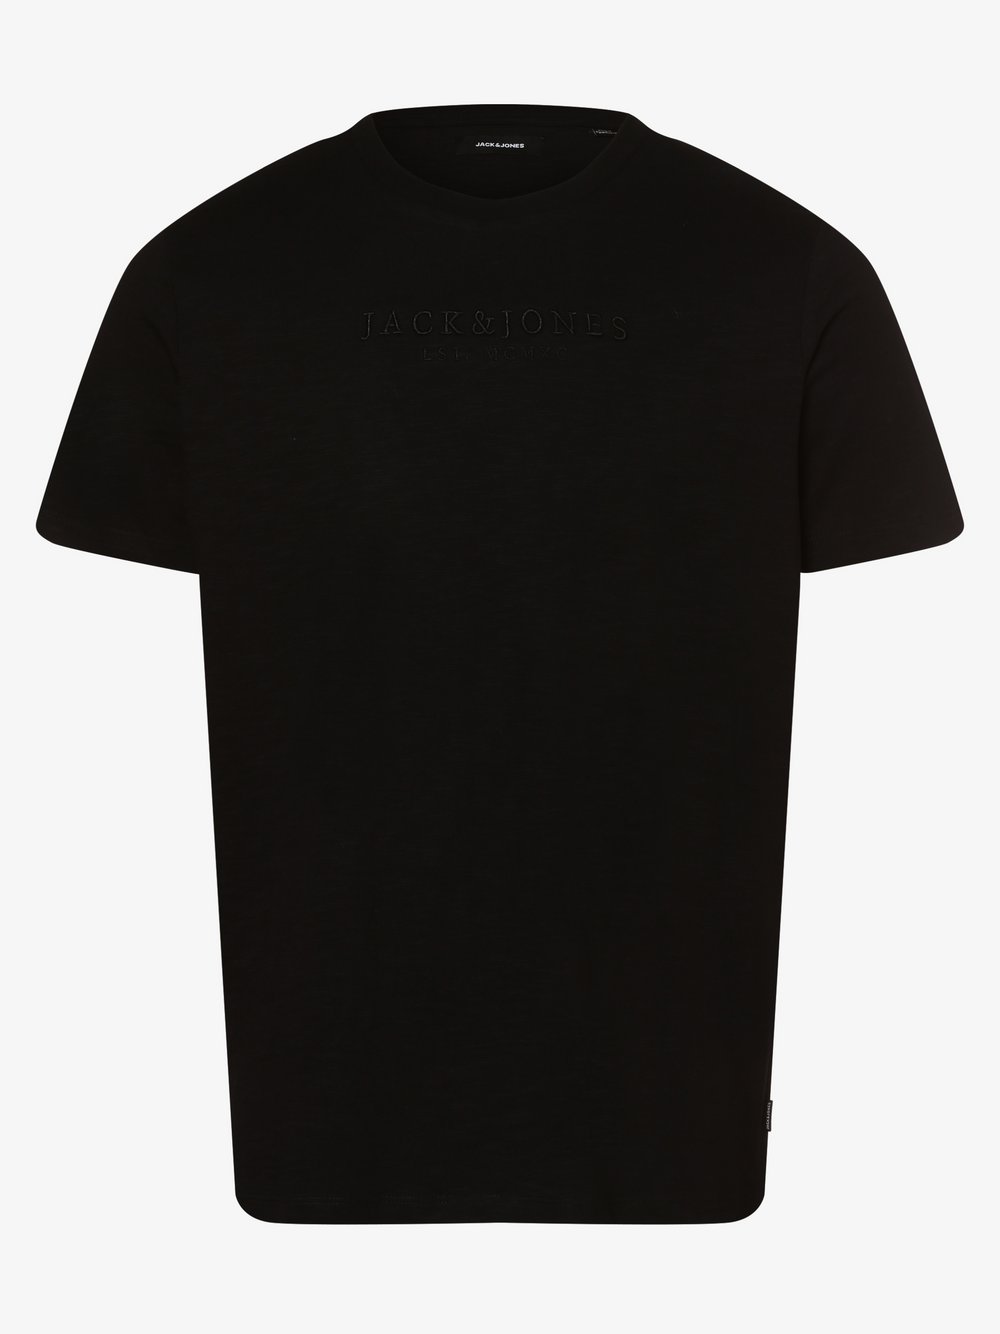 Jack & Jones - T-shirt męski – JJRome, czarny